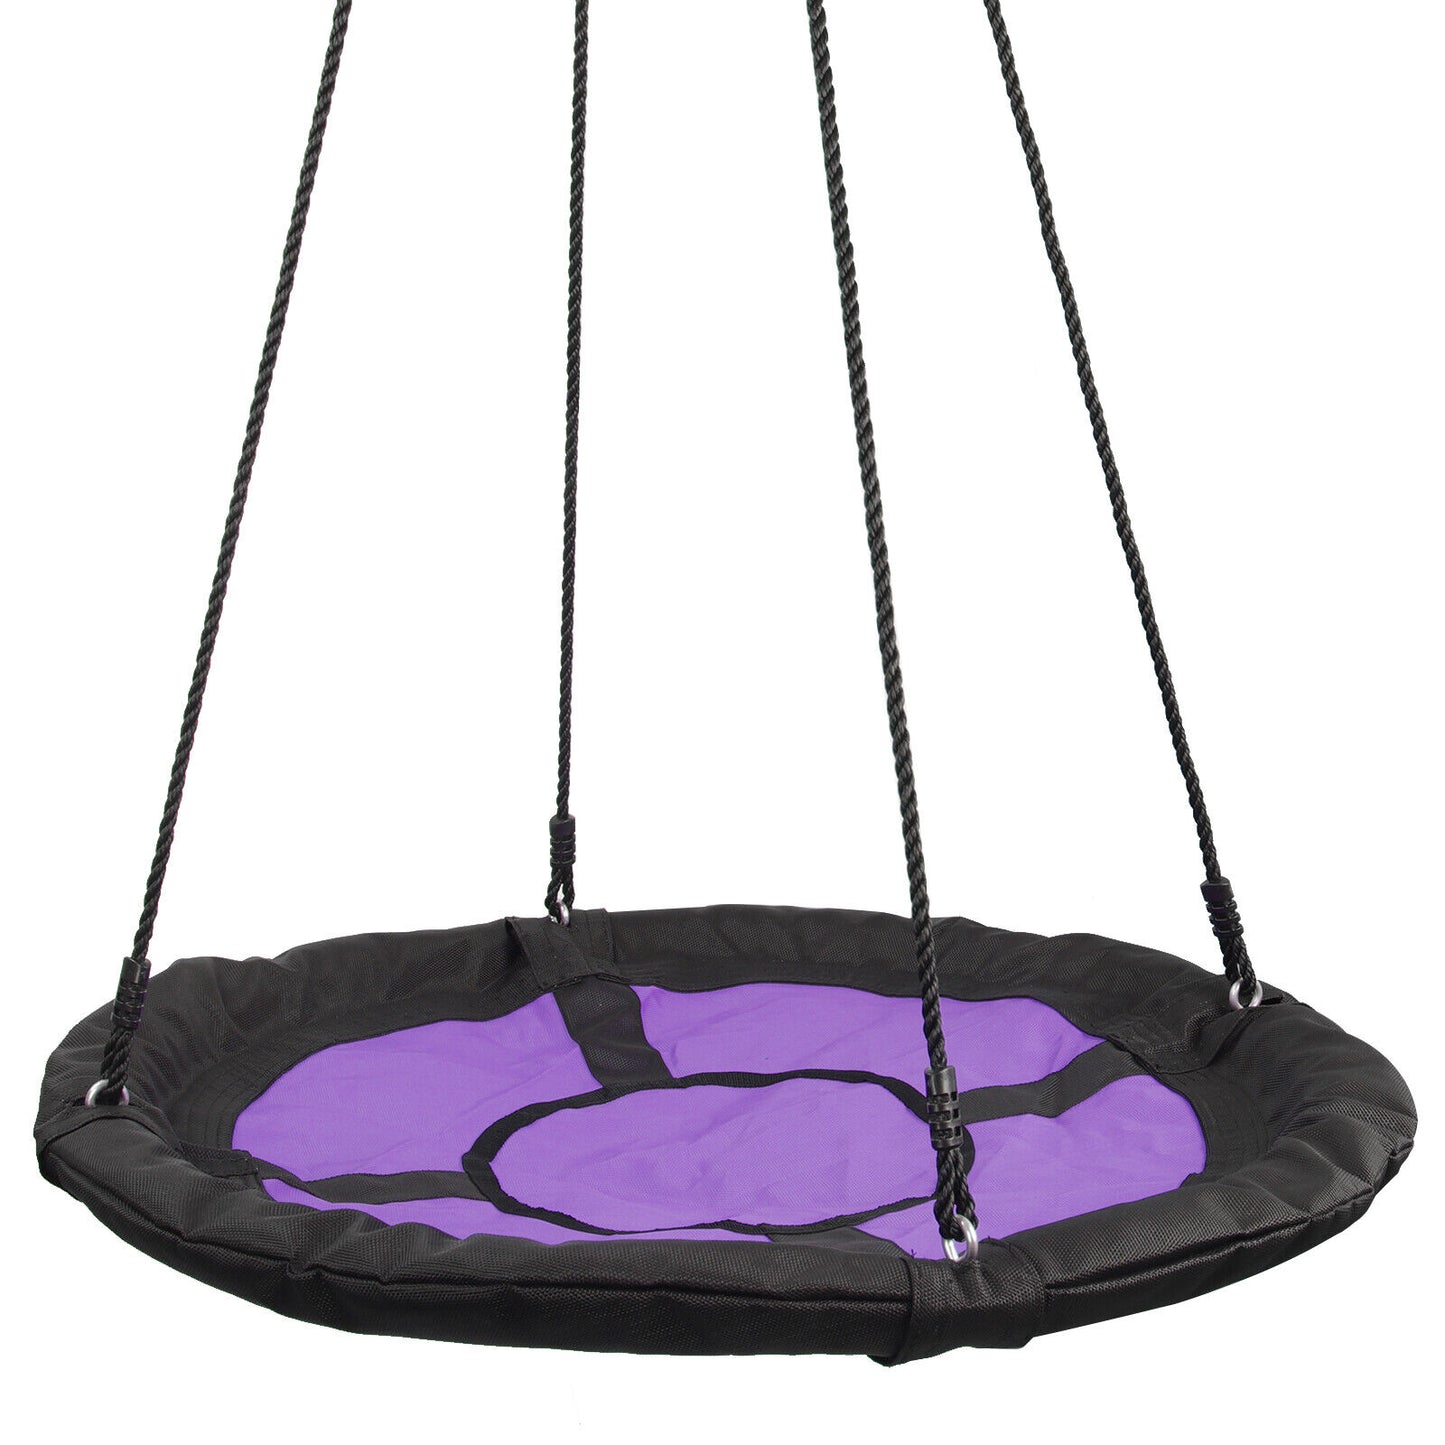 Giant 40" Disc Swing Seat Flying Saucer Tree web Swings Playground Backyard Home